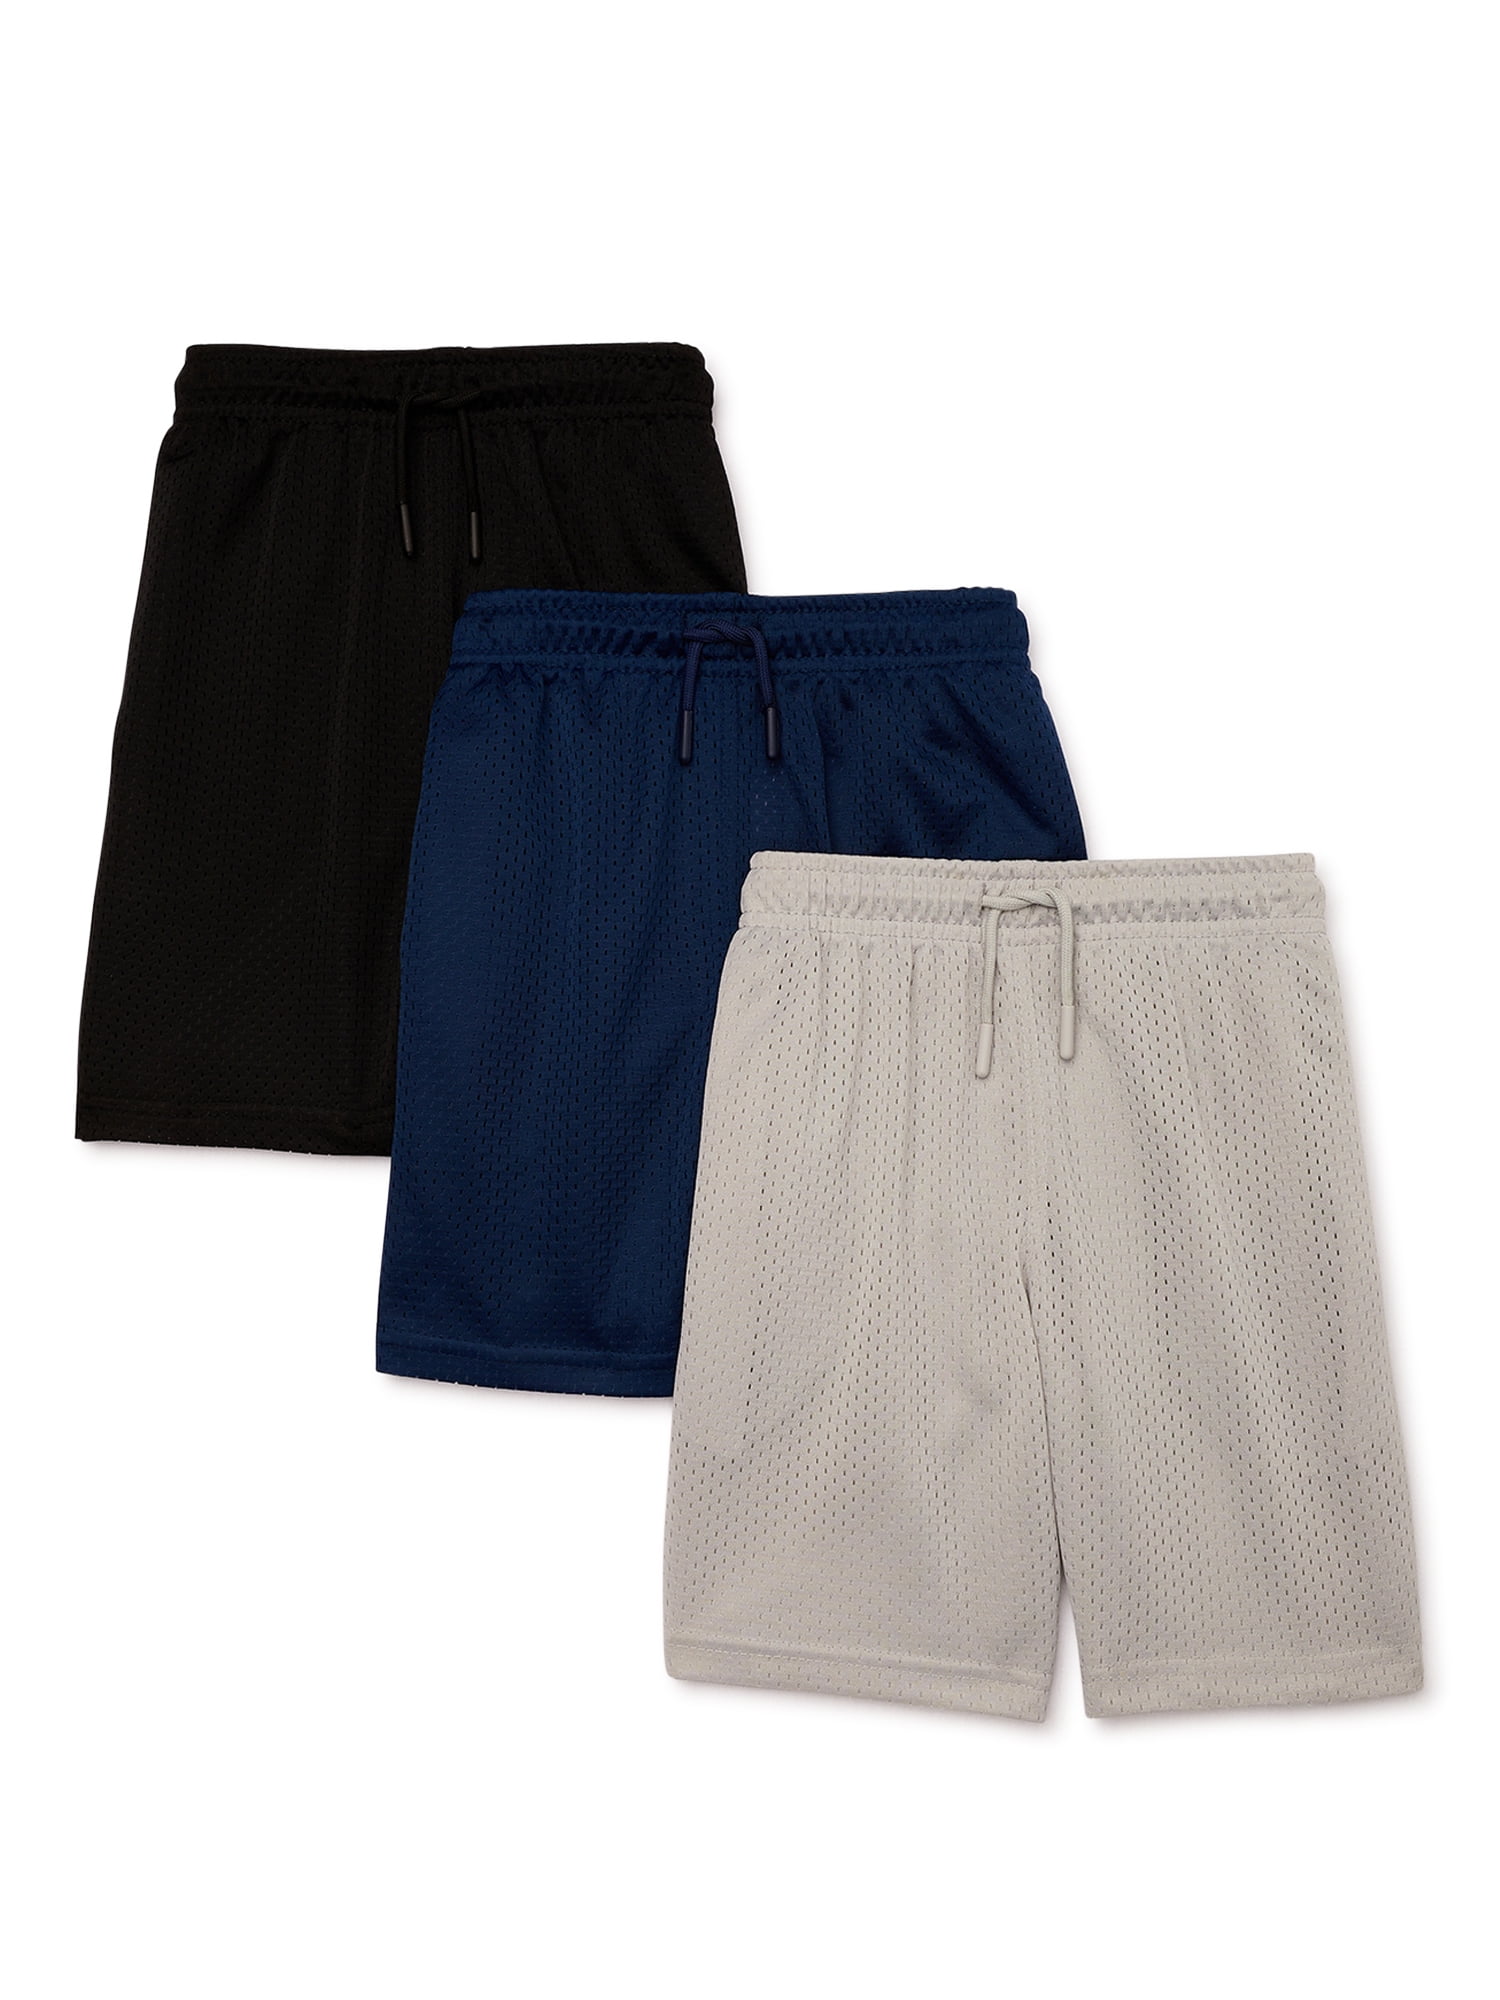 Athletic Works Boys Active Mesh Shorts, 3-Pack, Sizes 4-18 & Husky ...